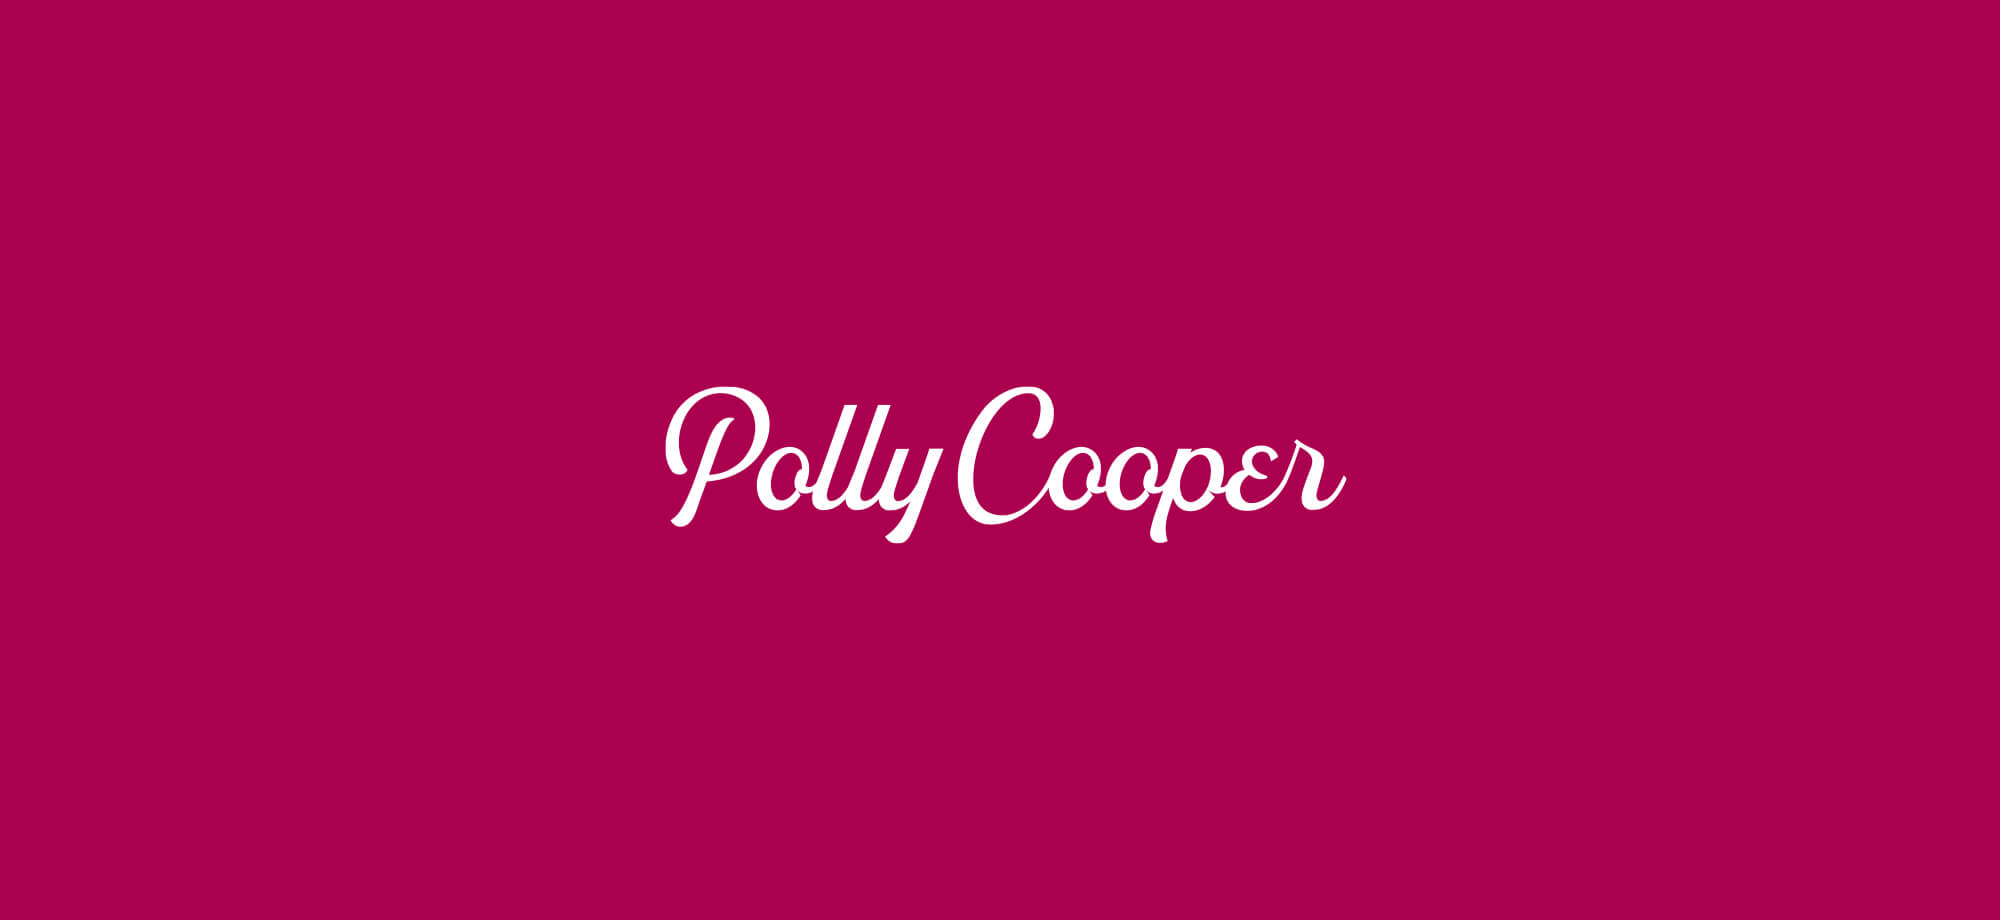 Polly Cooper lockup